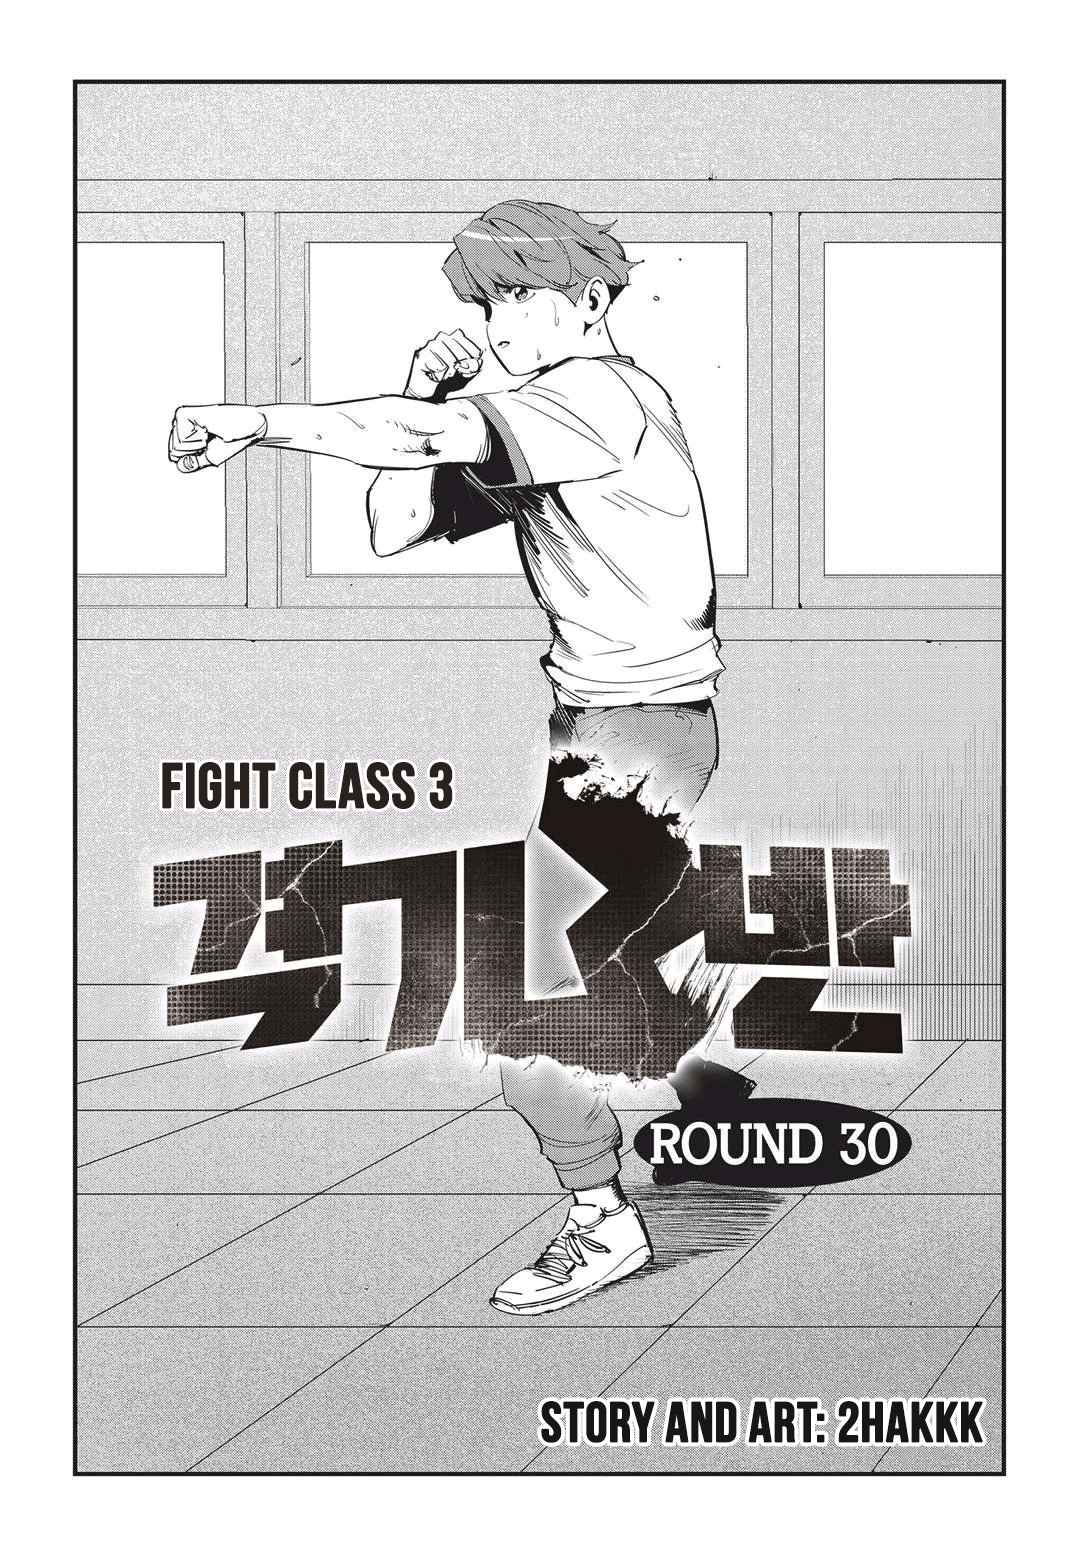 Fight Class 3 Vol. 5 Ch. 30 Round 30